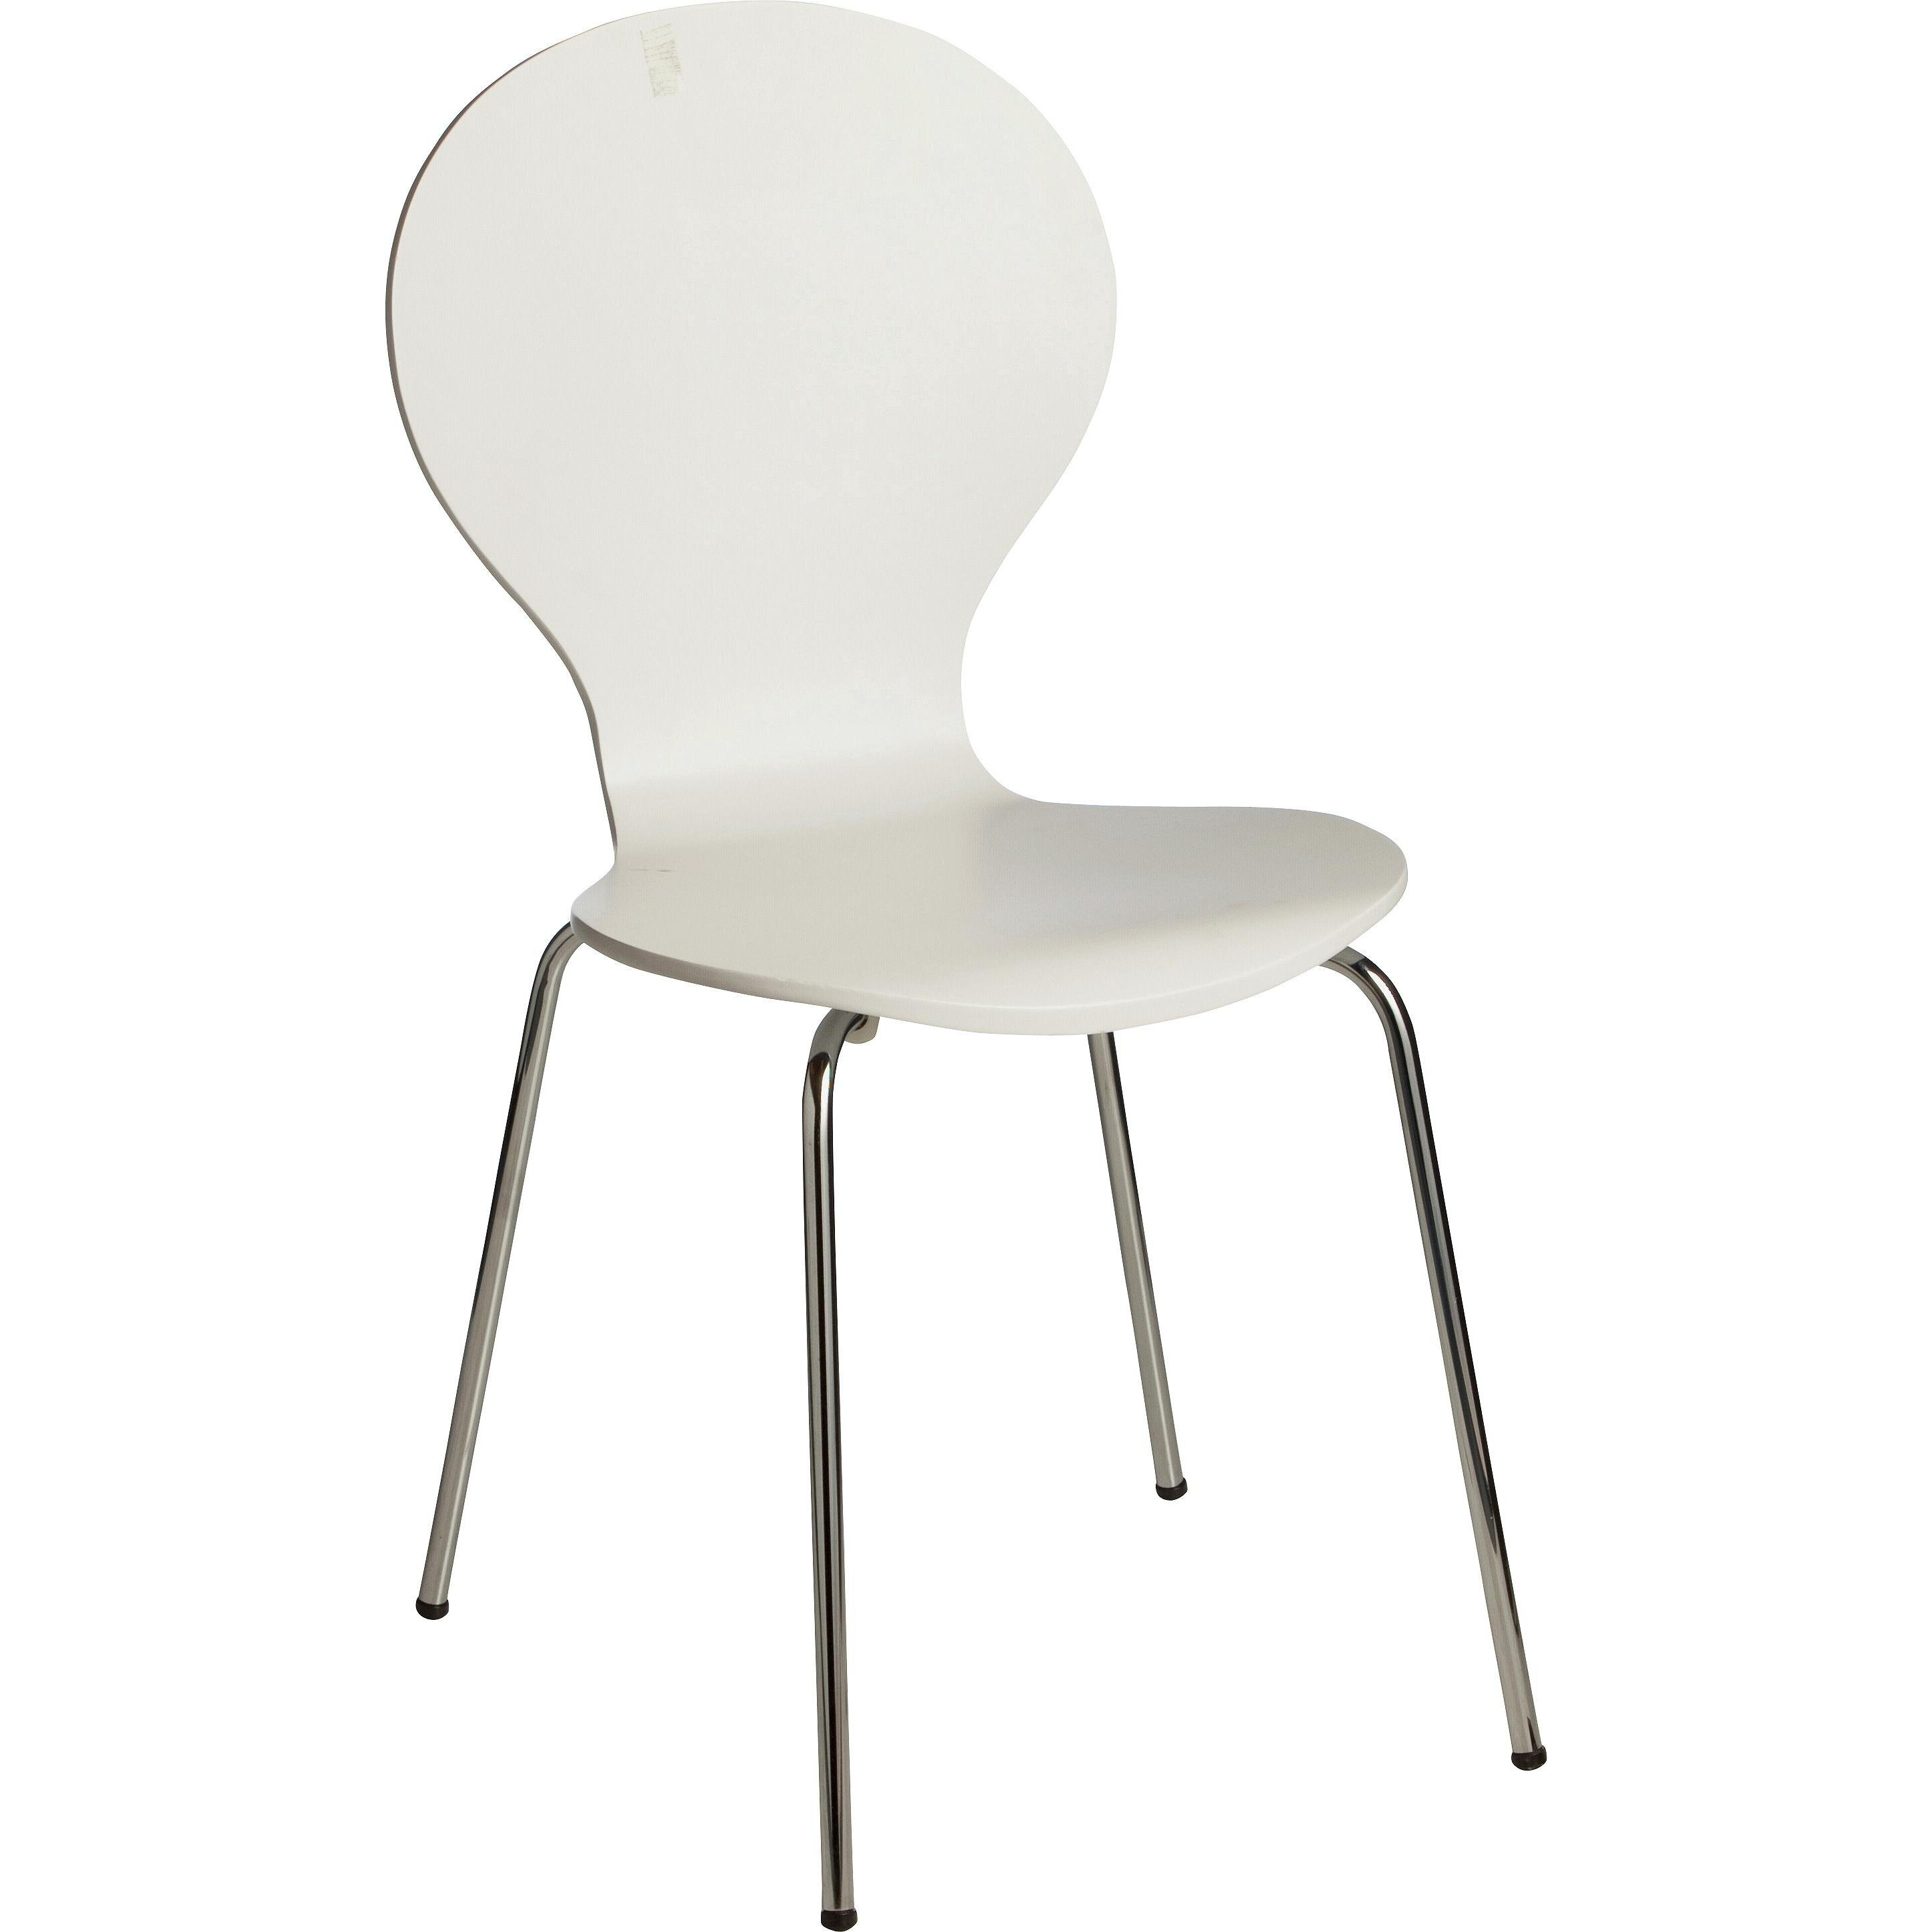 Habitat Bentwood Dining Chair - Super White - image 1